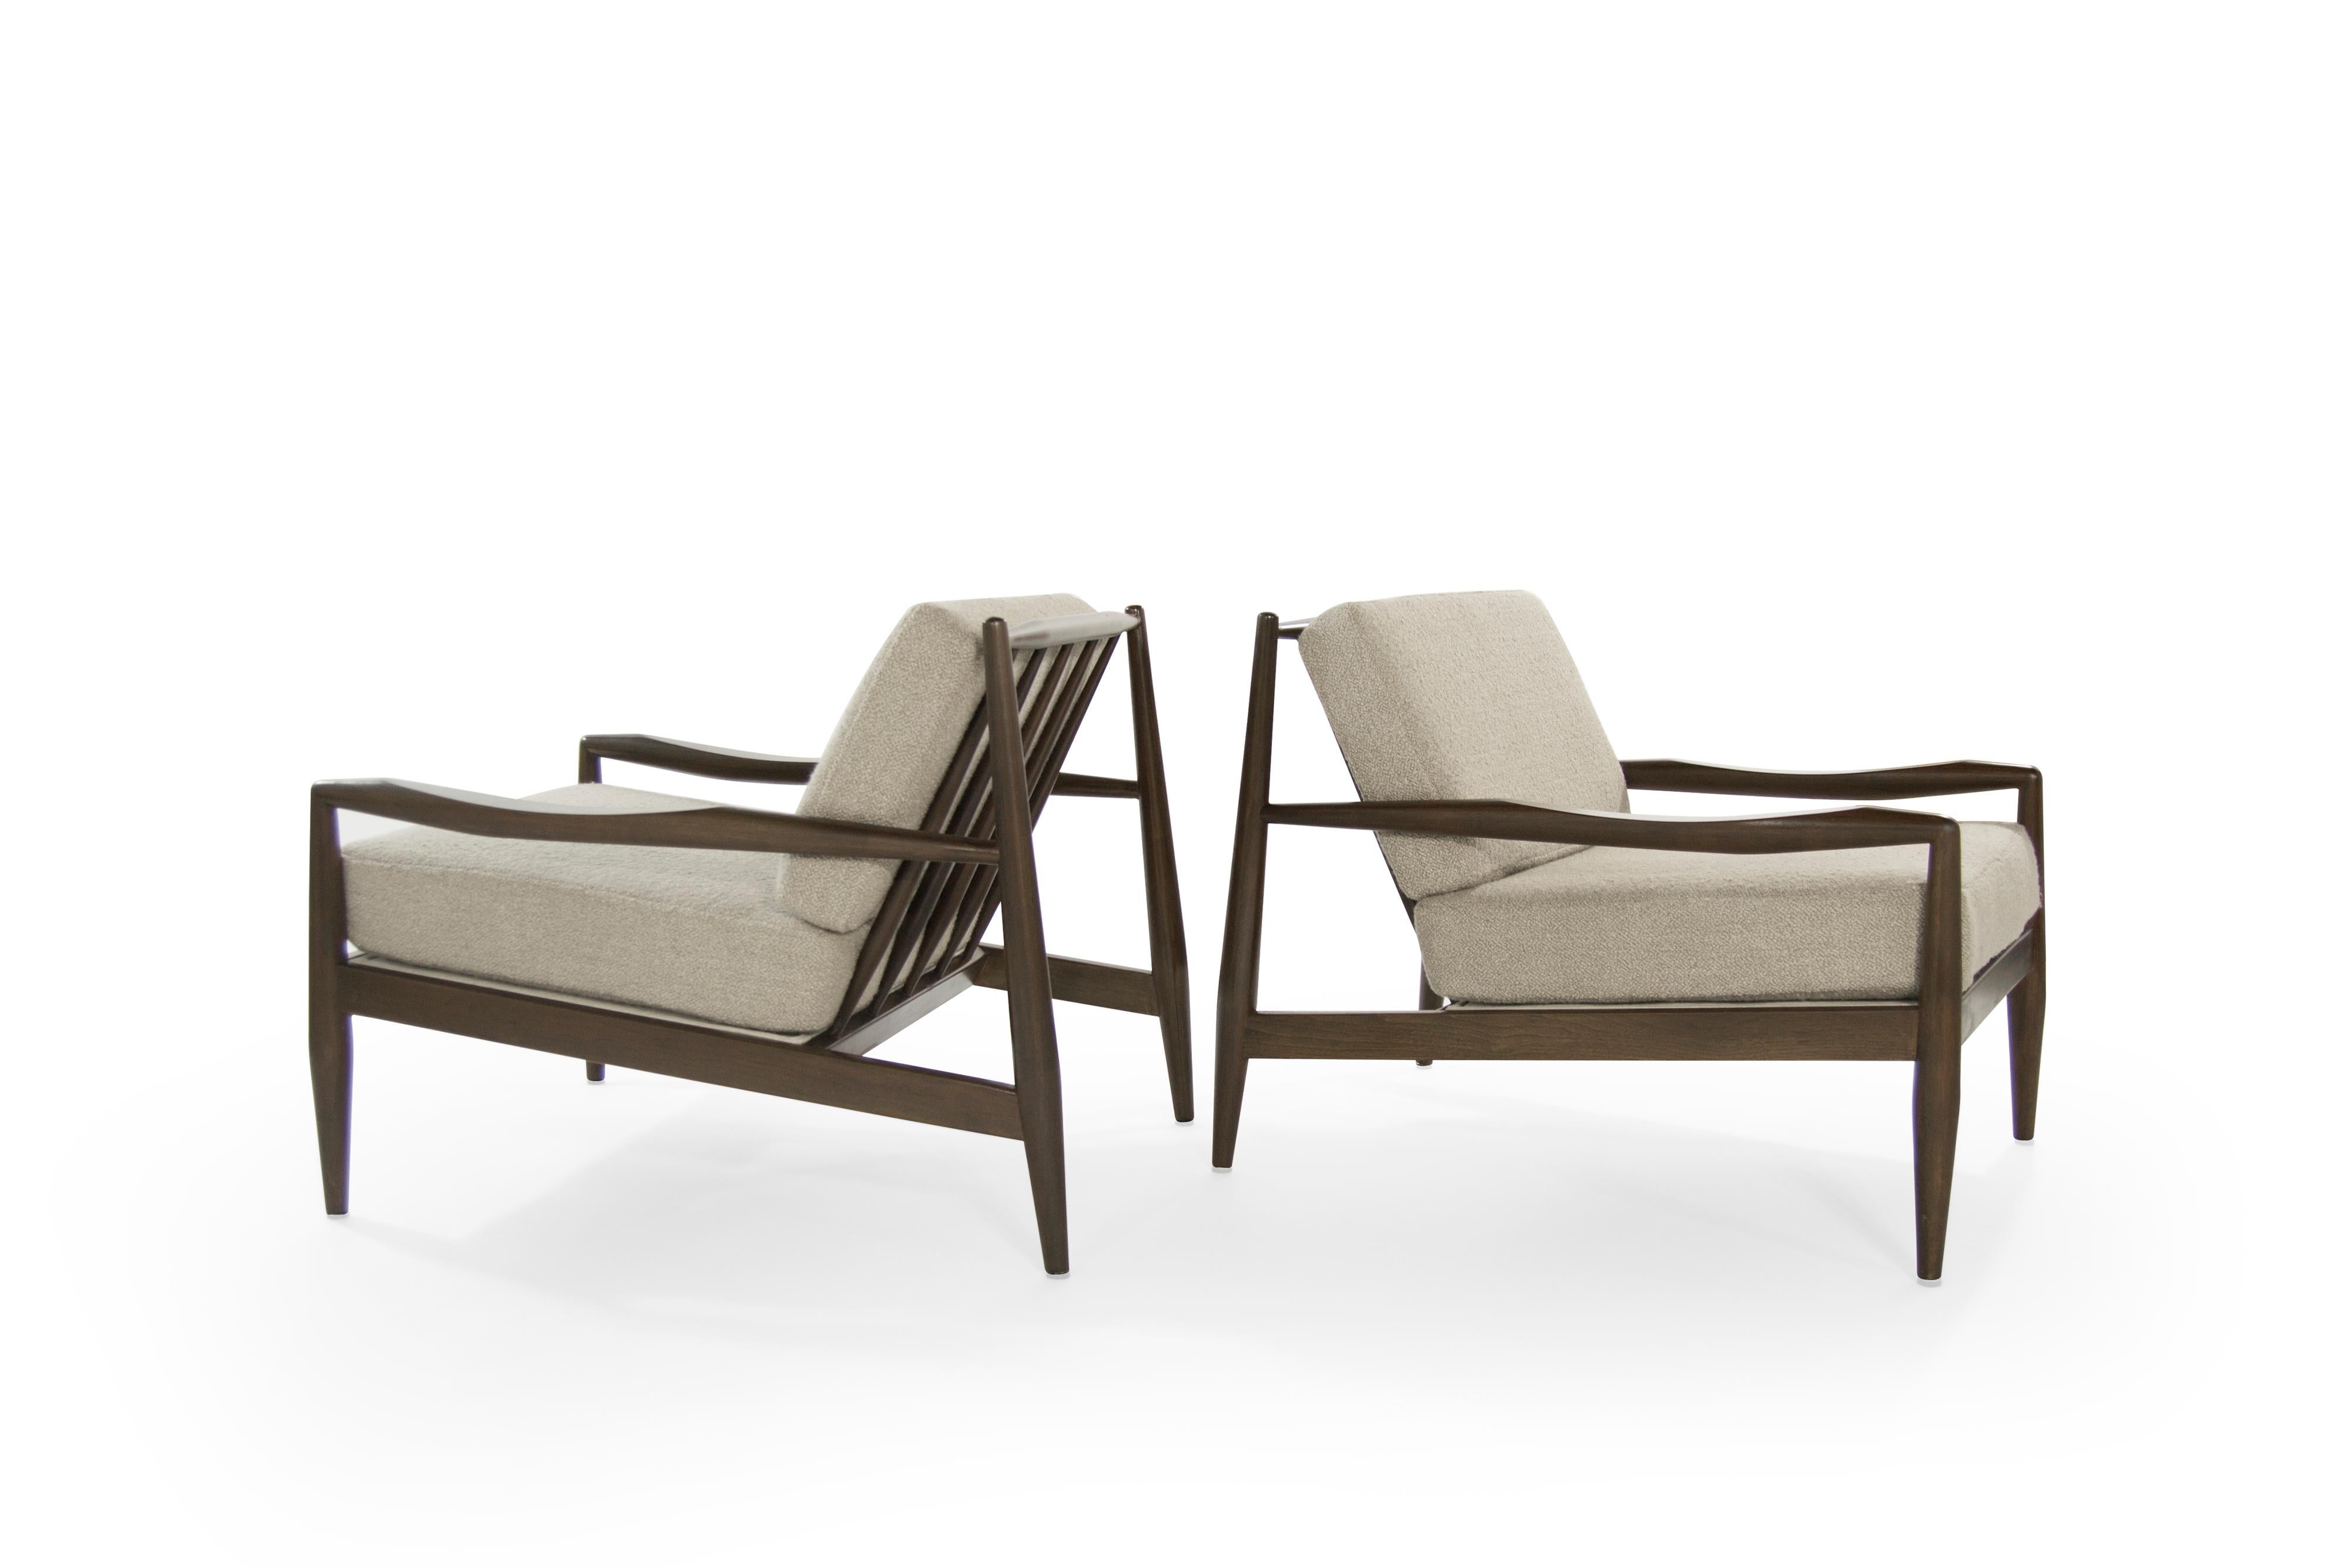 20th Century Adrian Pearsall Walnut Lounge Chairs, Model 834-C, circa 1950s